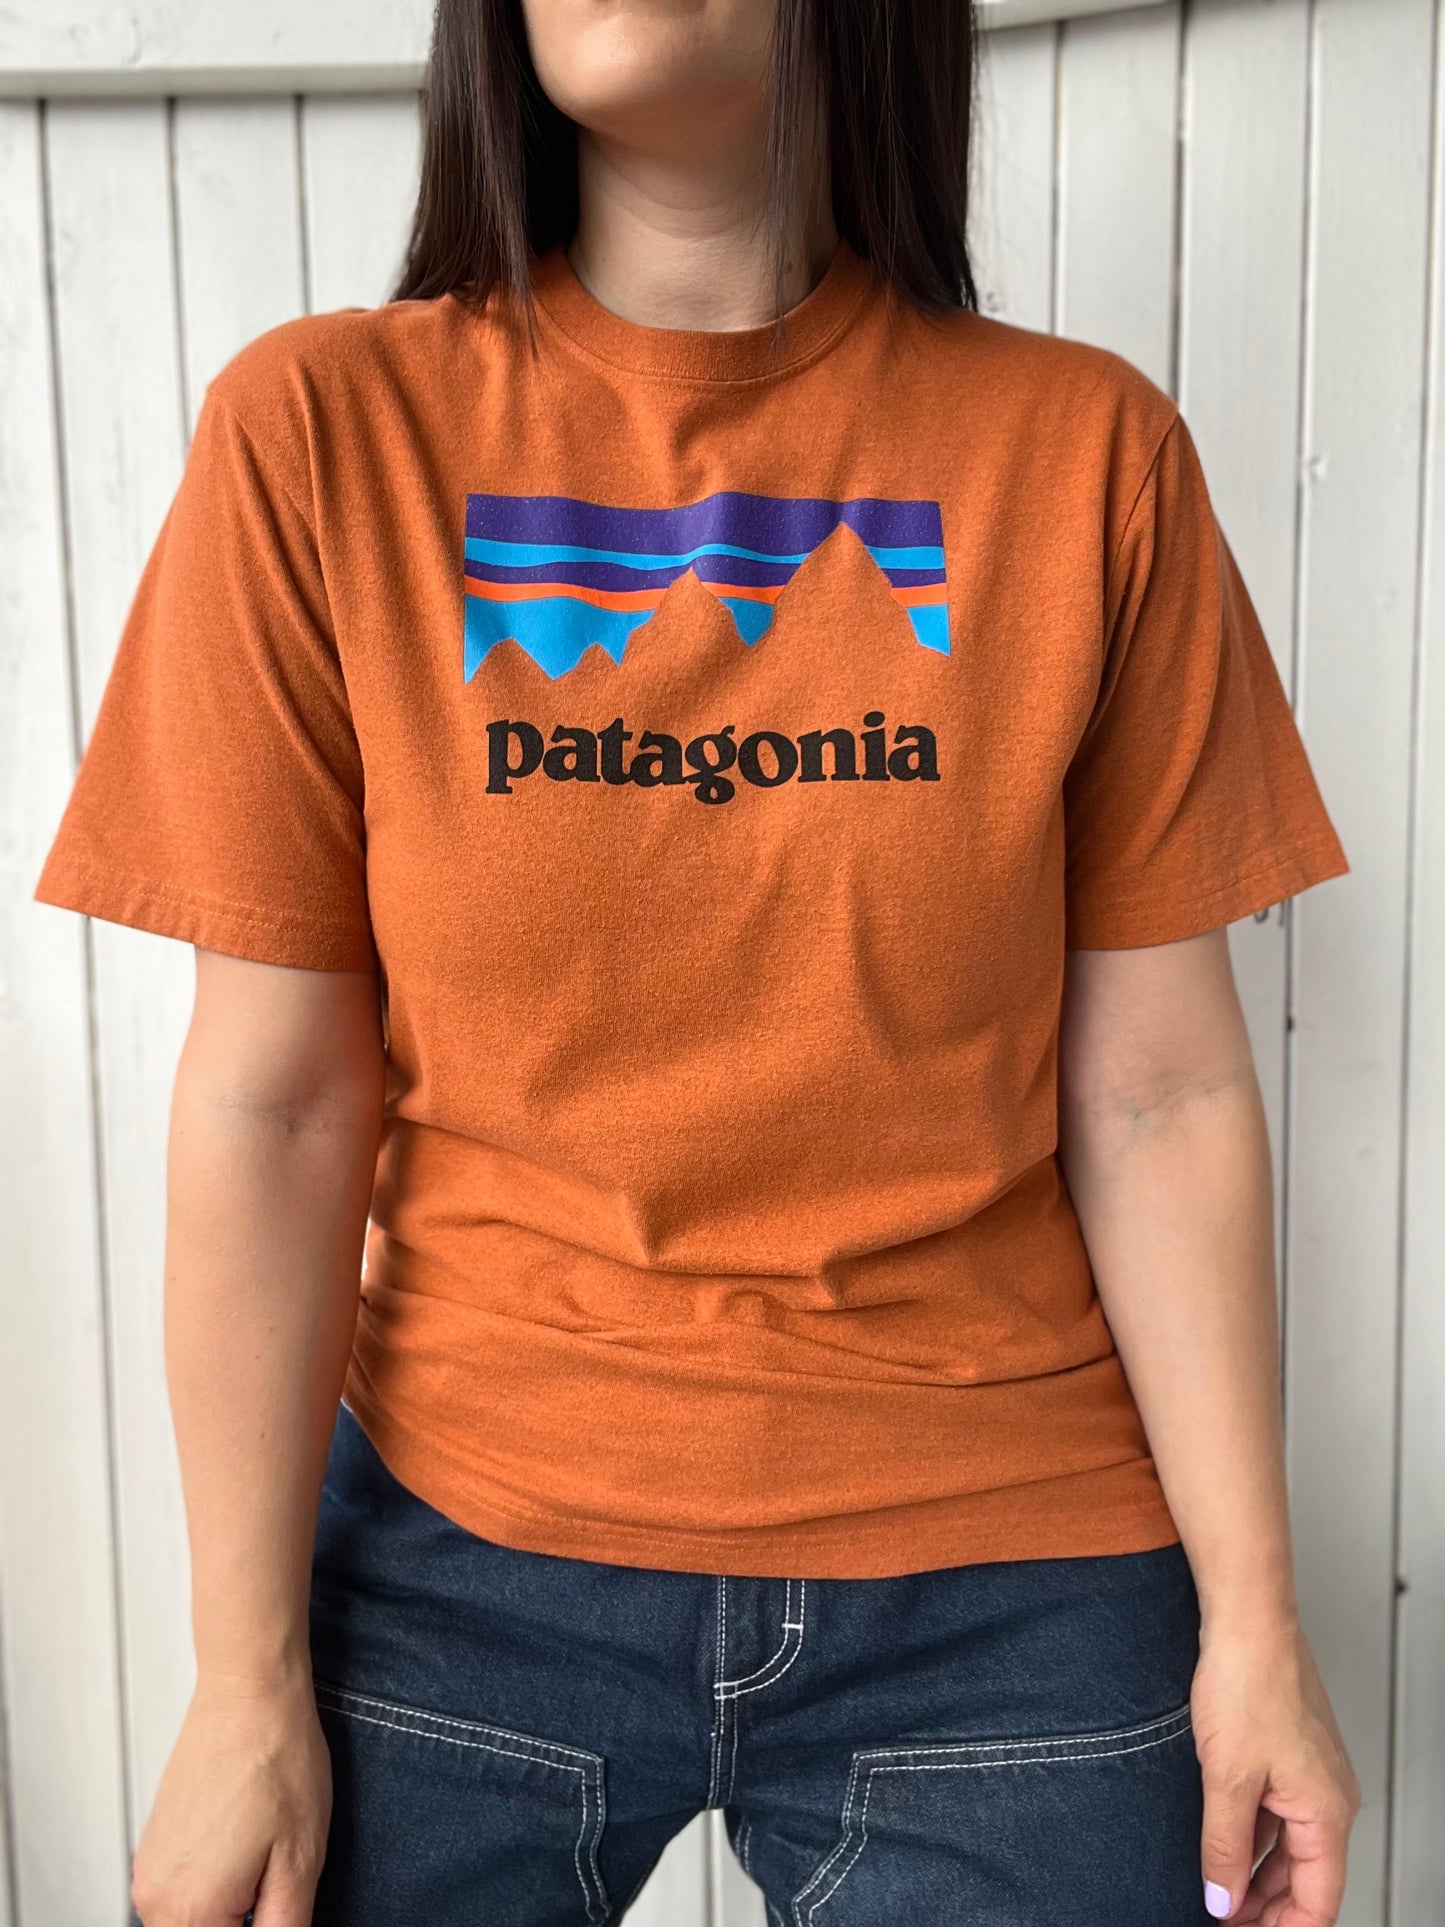 Patagonia Responsibili-Tee - Size M